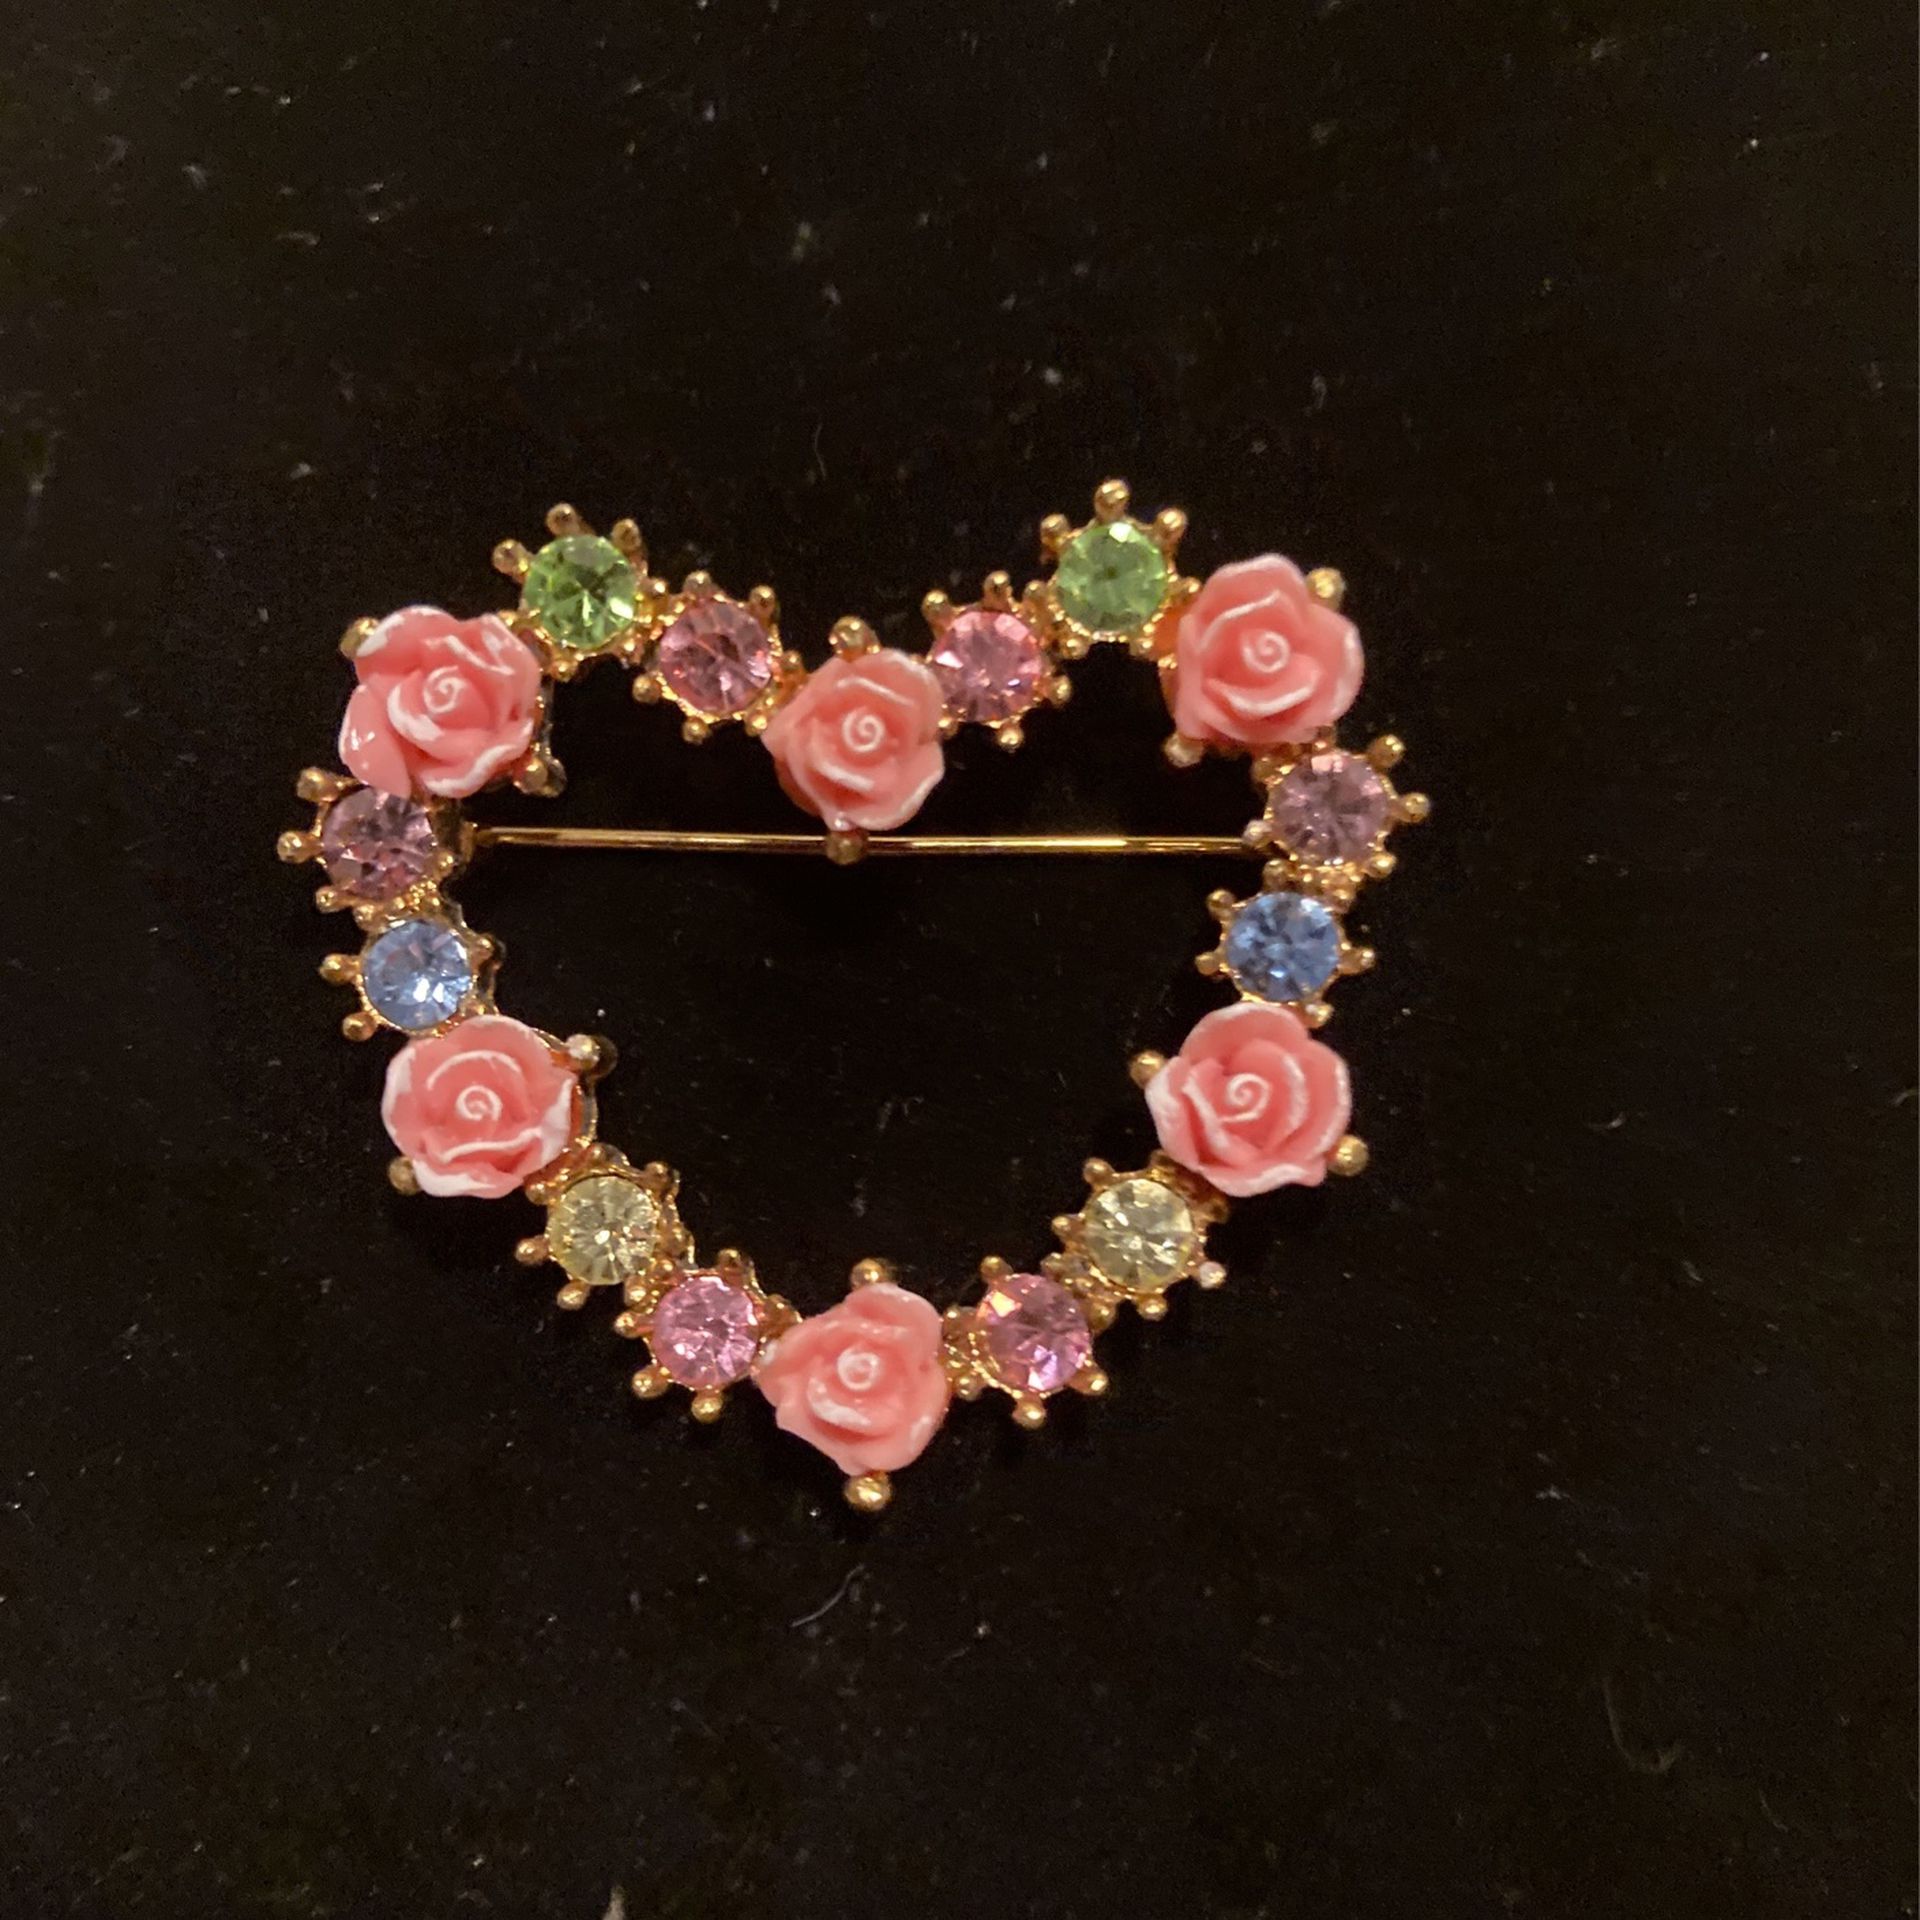 Vintage Heart Brooch, Pin - Pink Rose & Rhinestone - Good Condition - #artssoflo